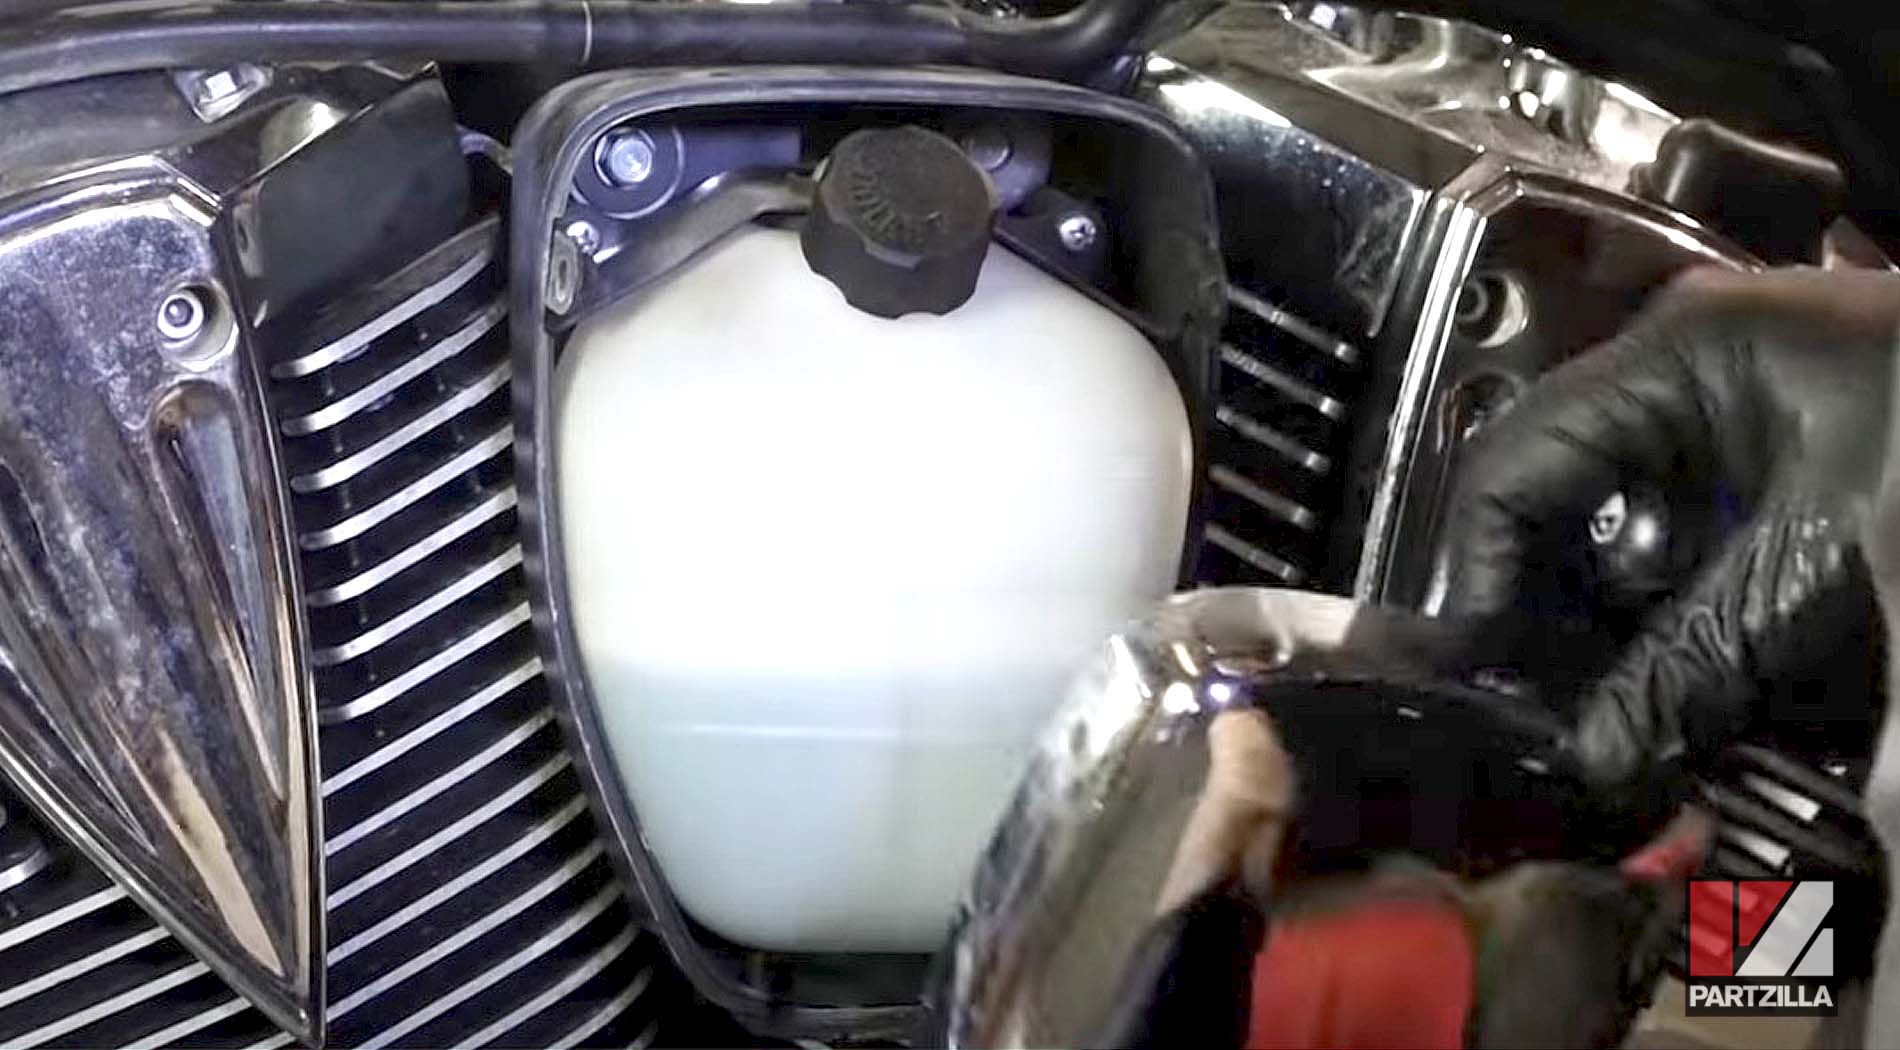 Honda motorcycle coolant change drain